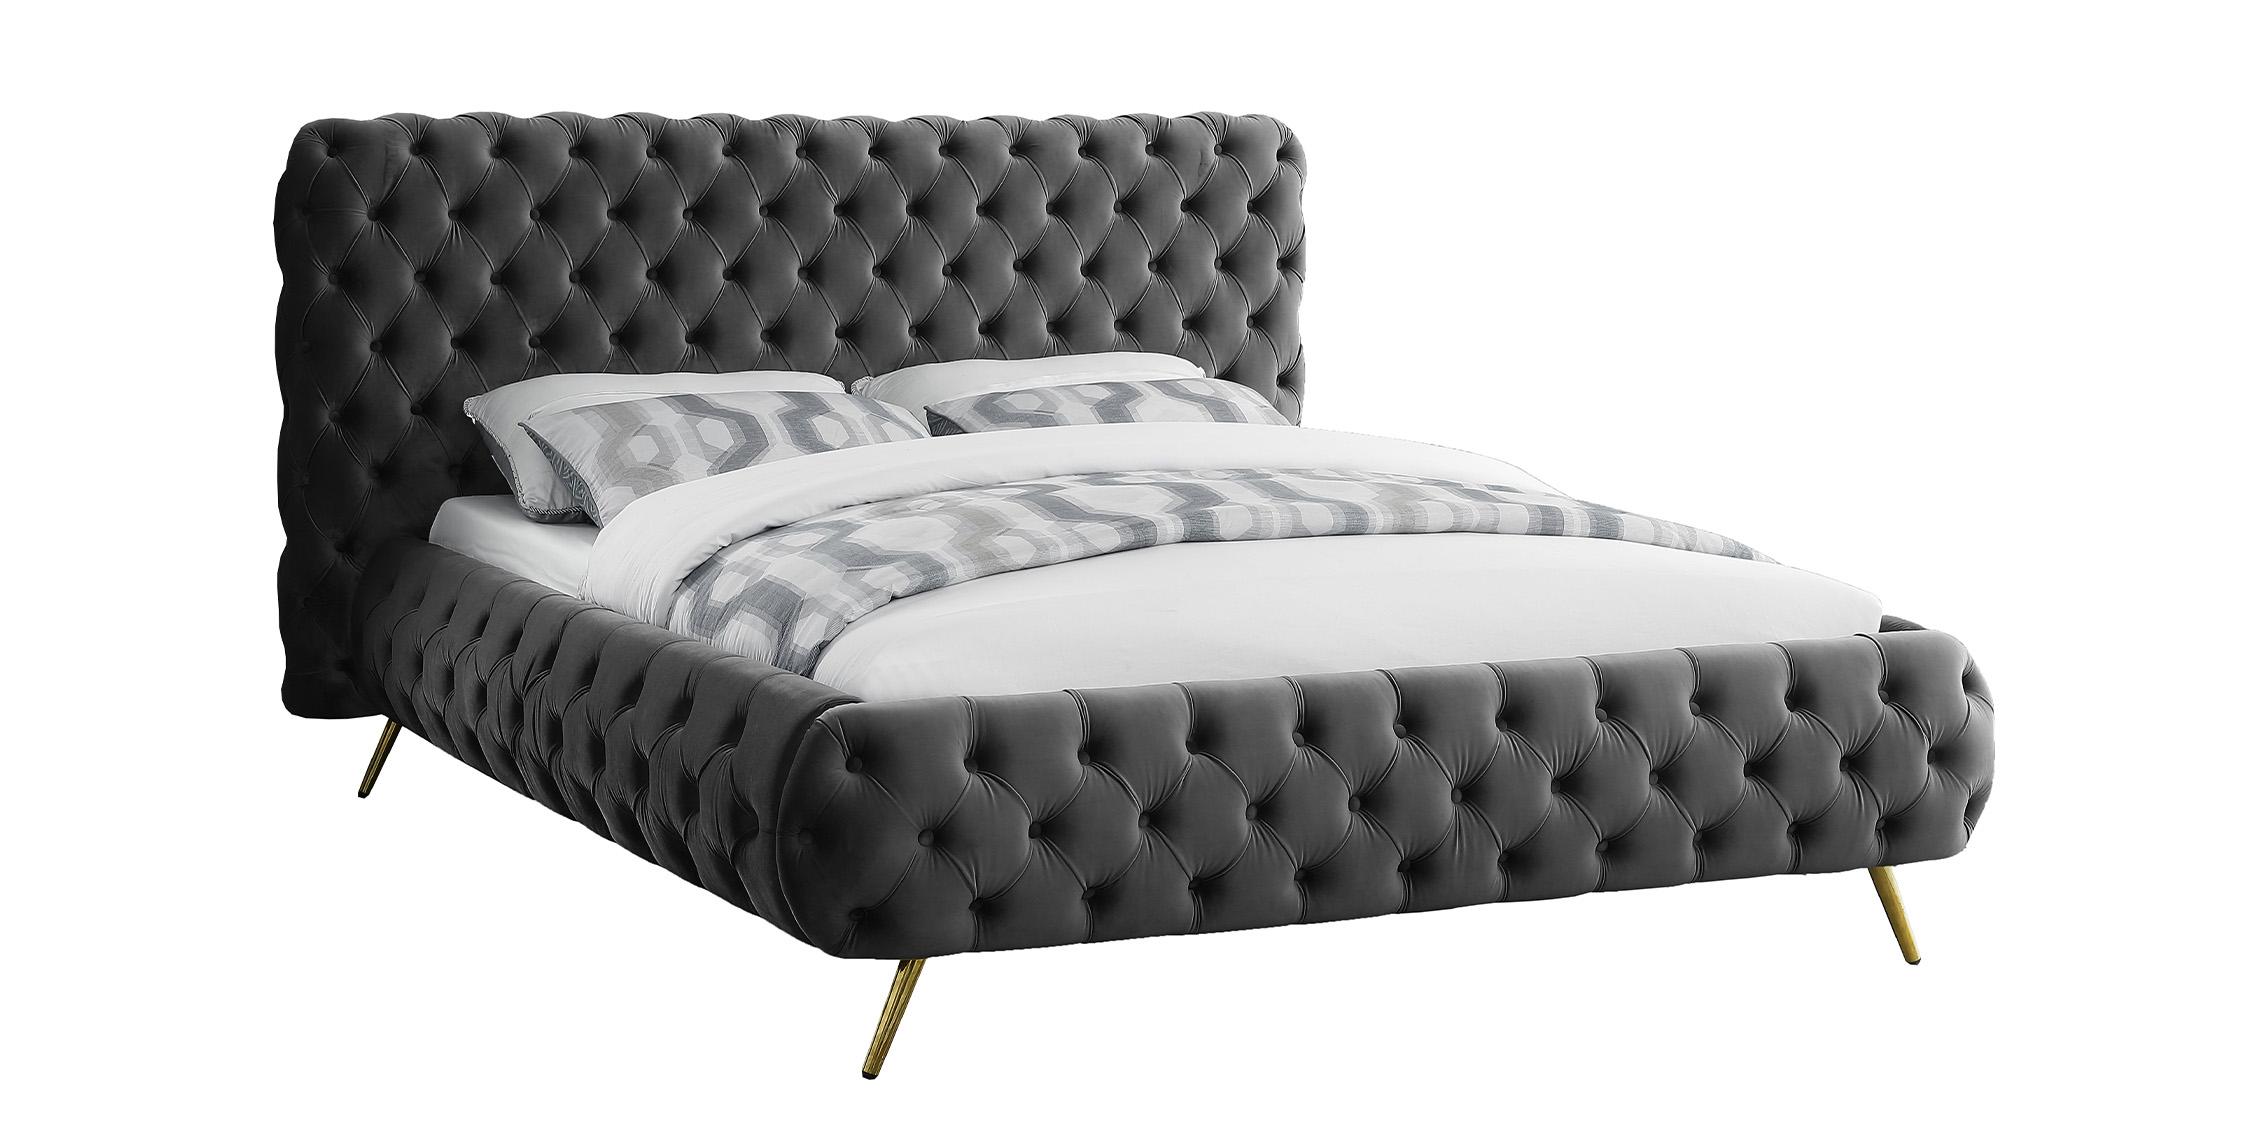 Contemporary, Modern Platform Bed DELANO DelanoGrey-Q DelanoGrey-Q in Gray Velvet